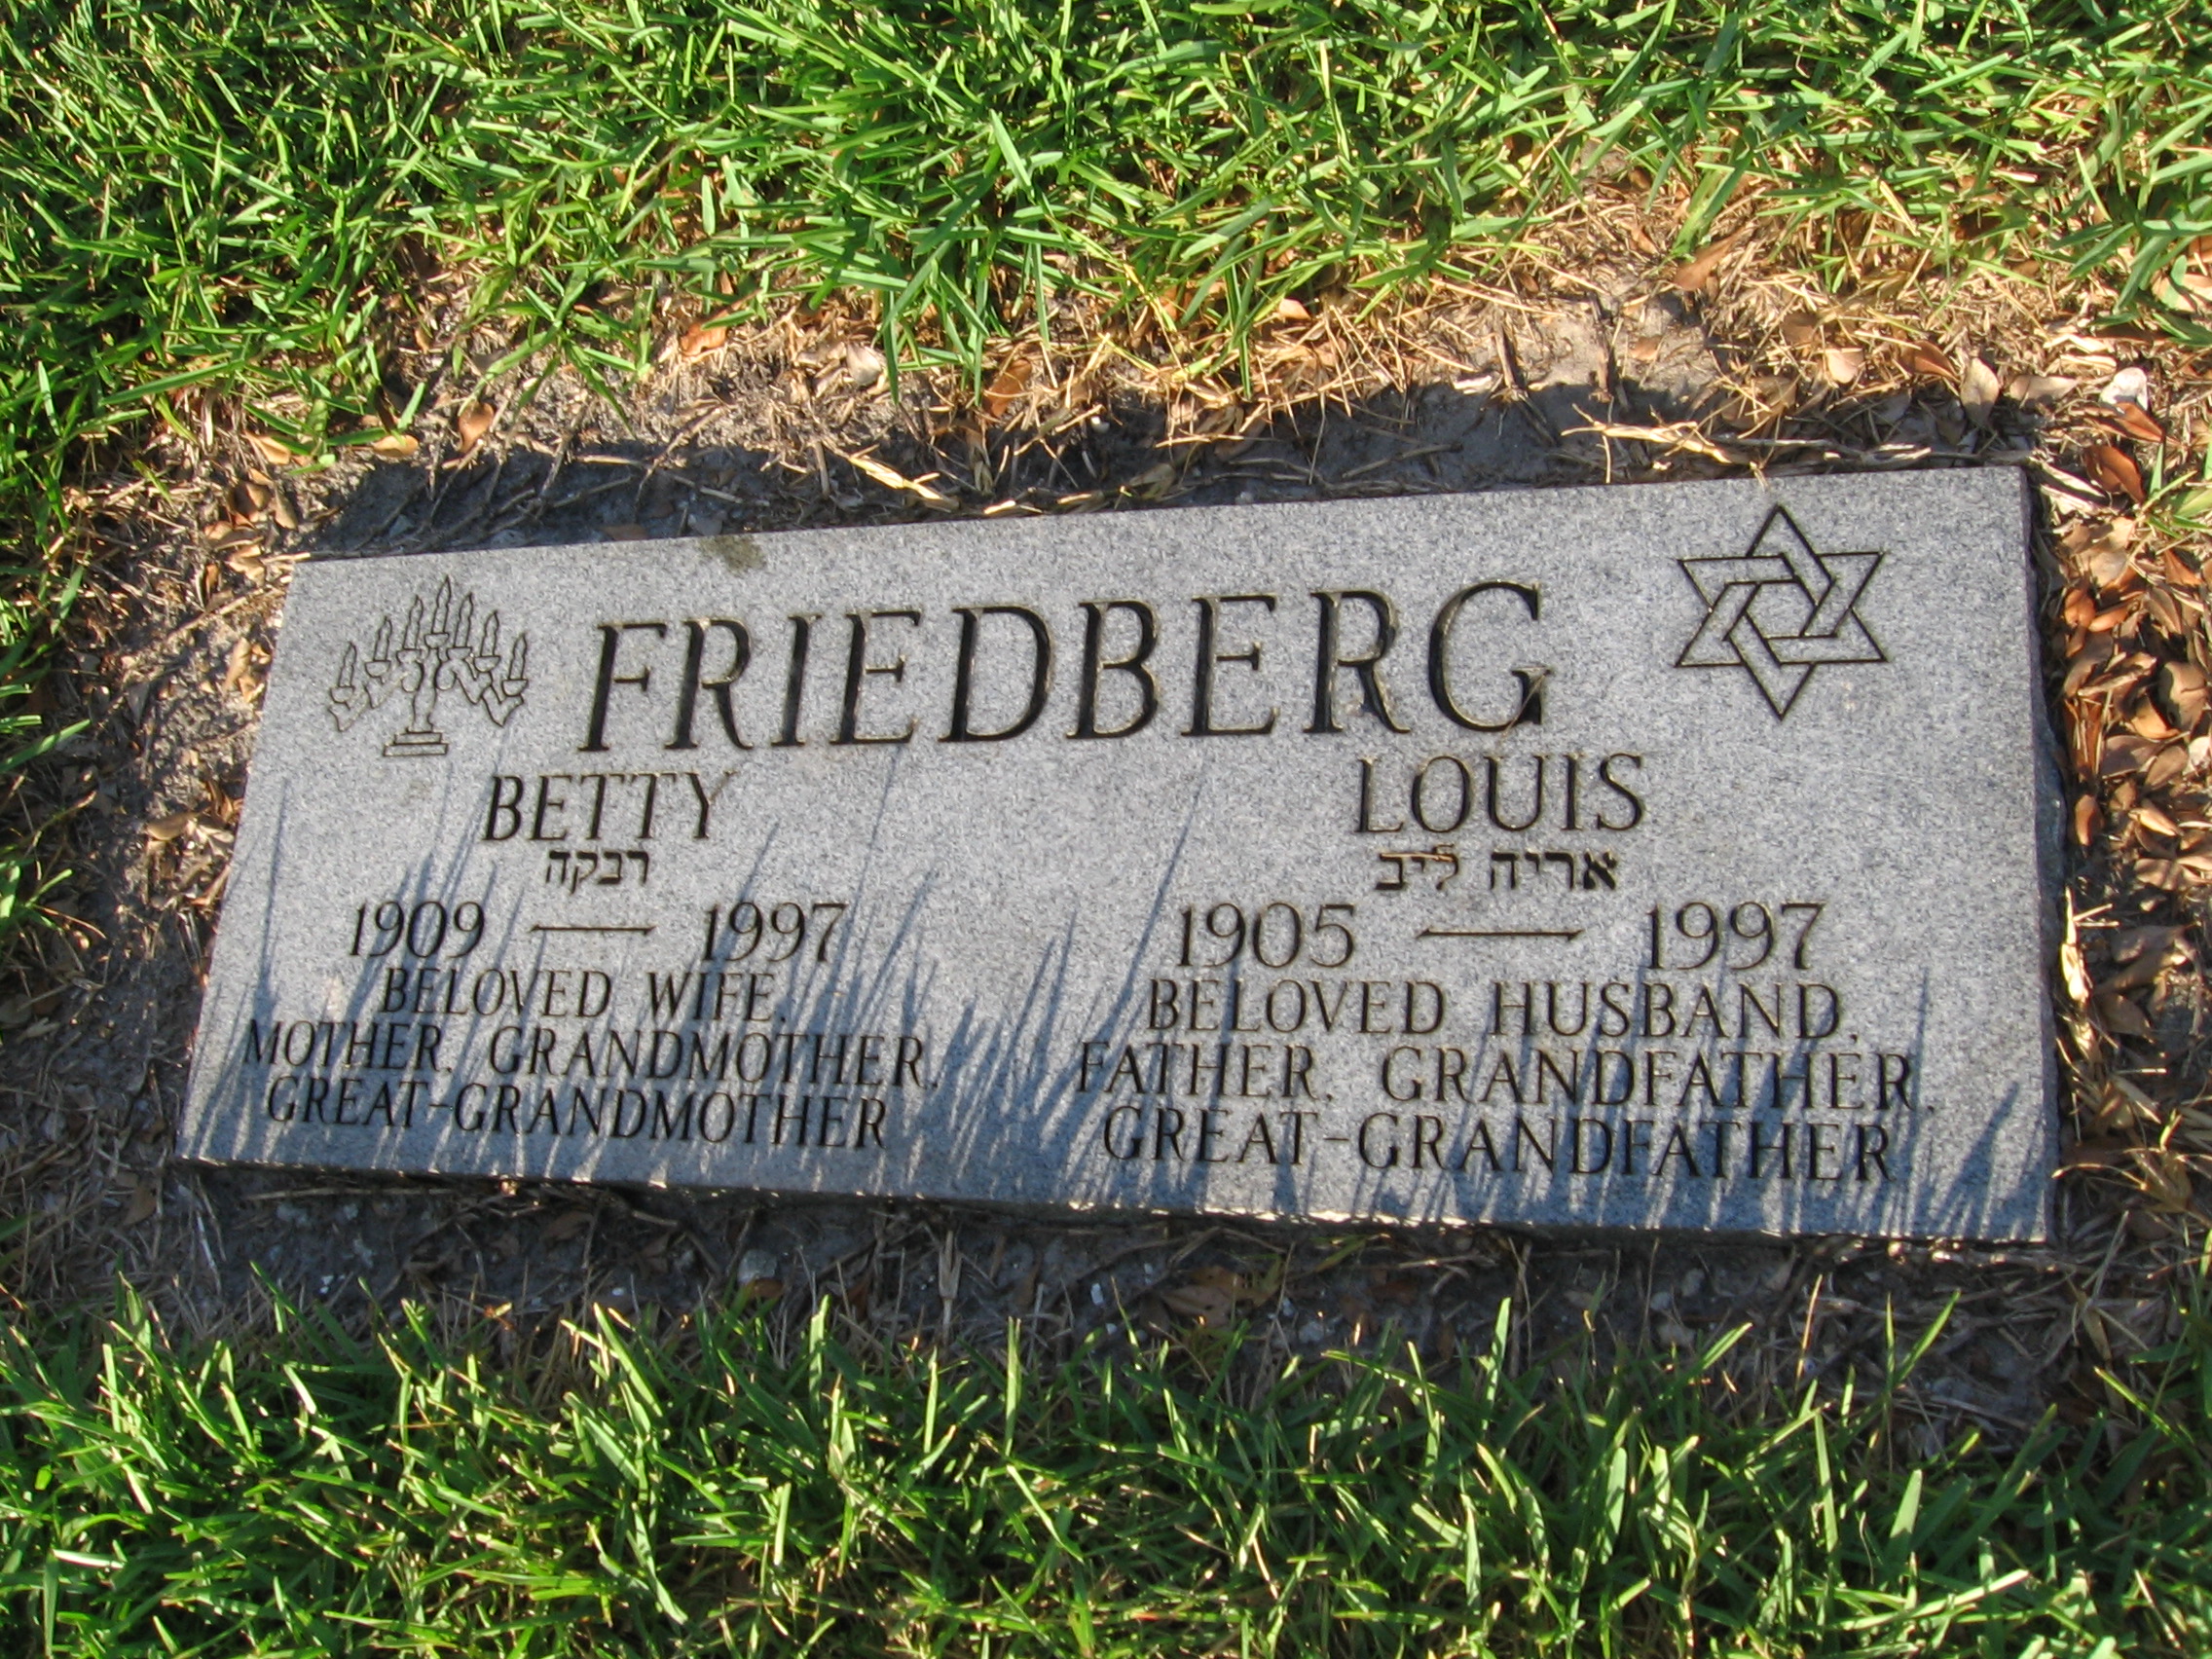 Louis Friedberg